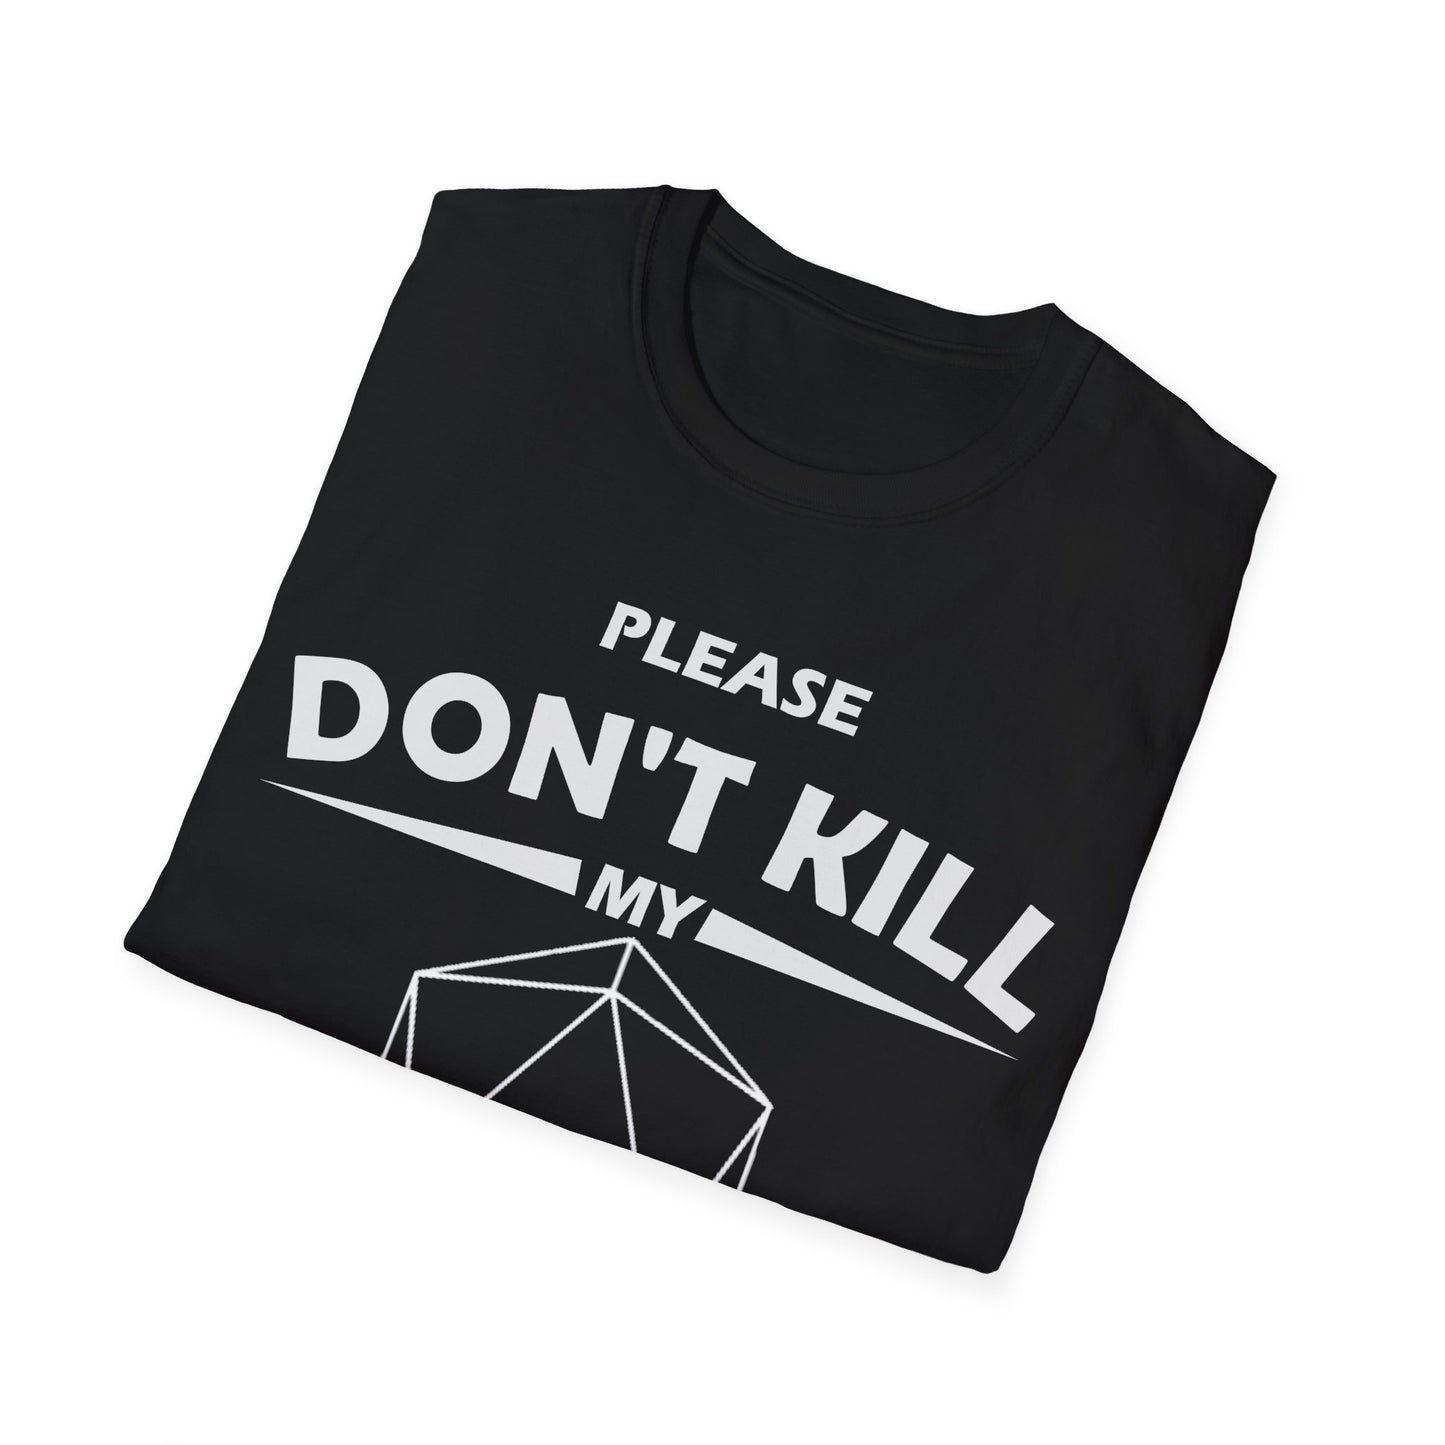 Please Don't Kill My Warlock - White - Unisex Softstyle T-Shirt